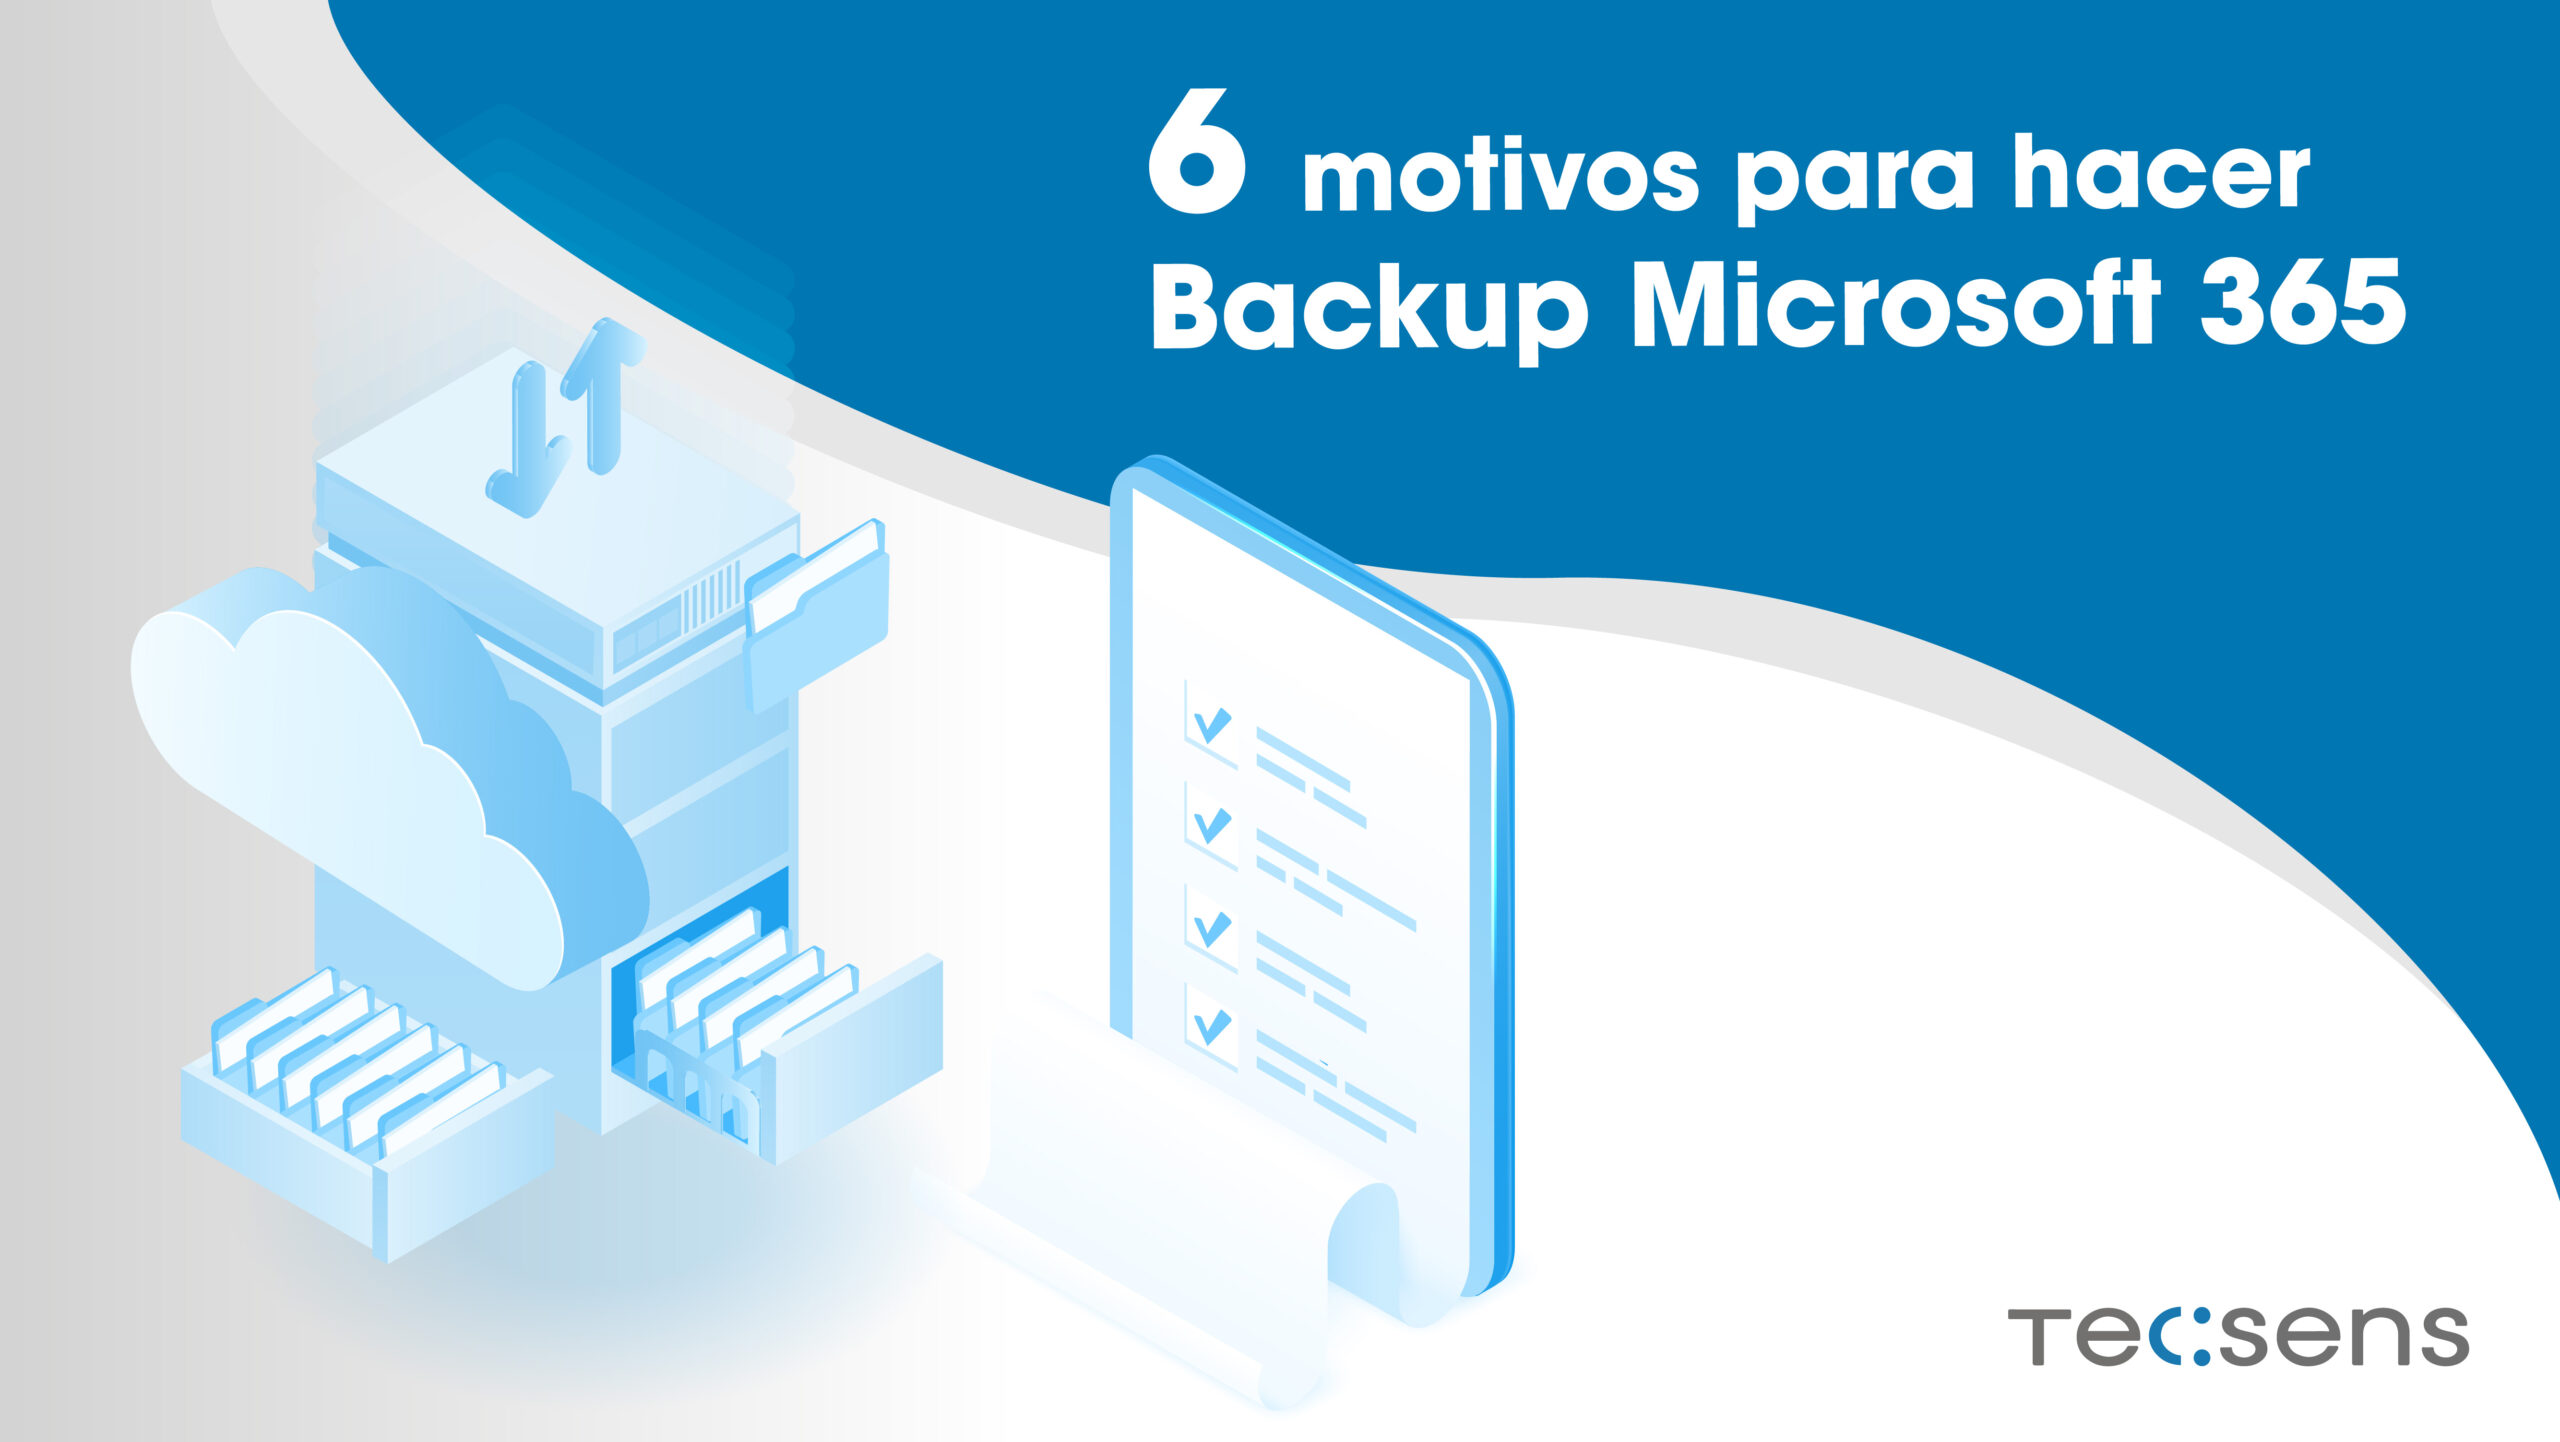 6 motivos para hacer Backup Microsoft 365 - Tecsens - Seguridad TI